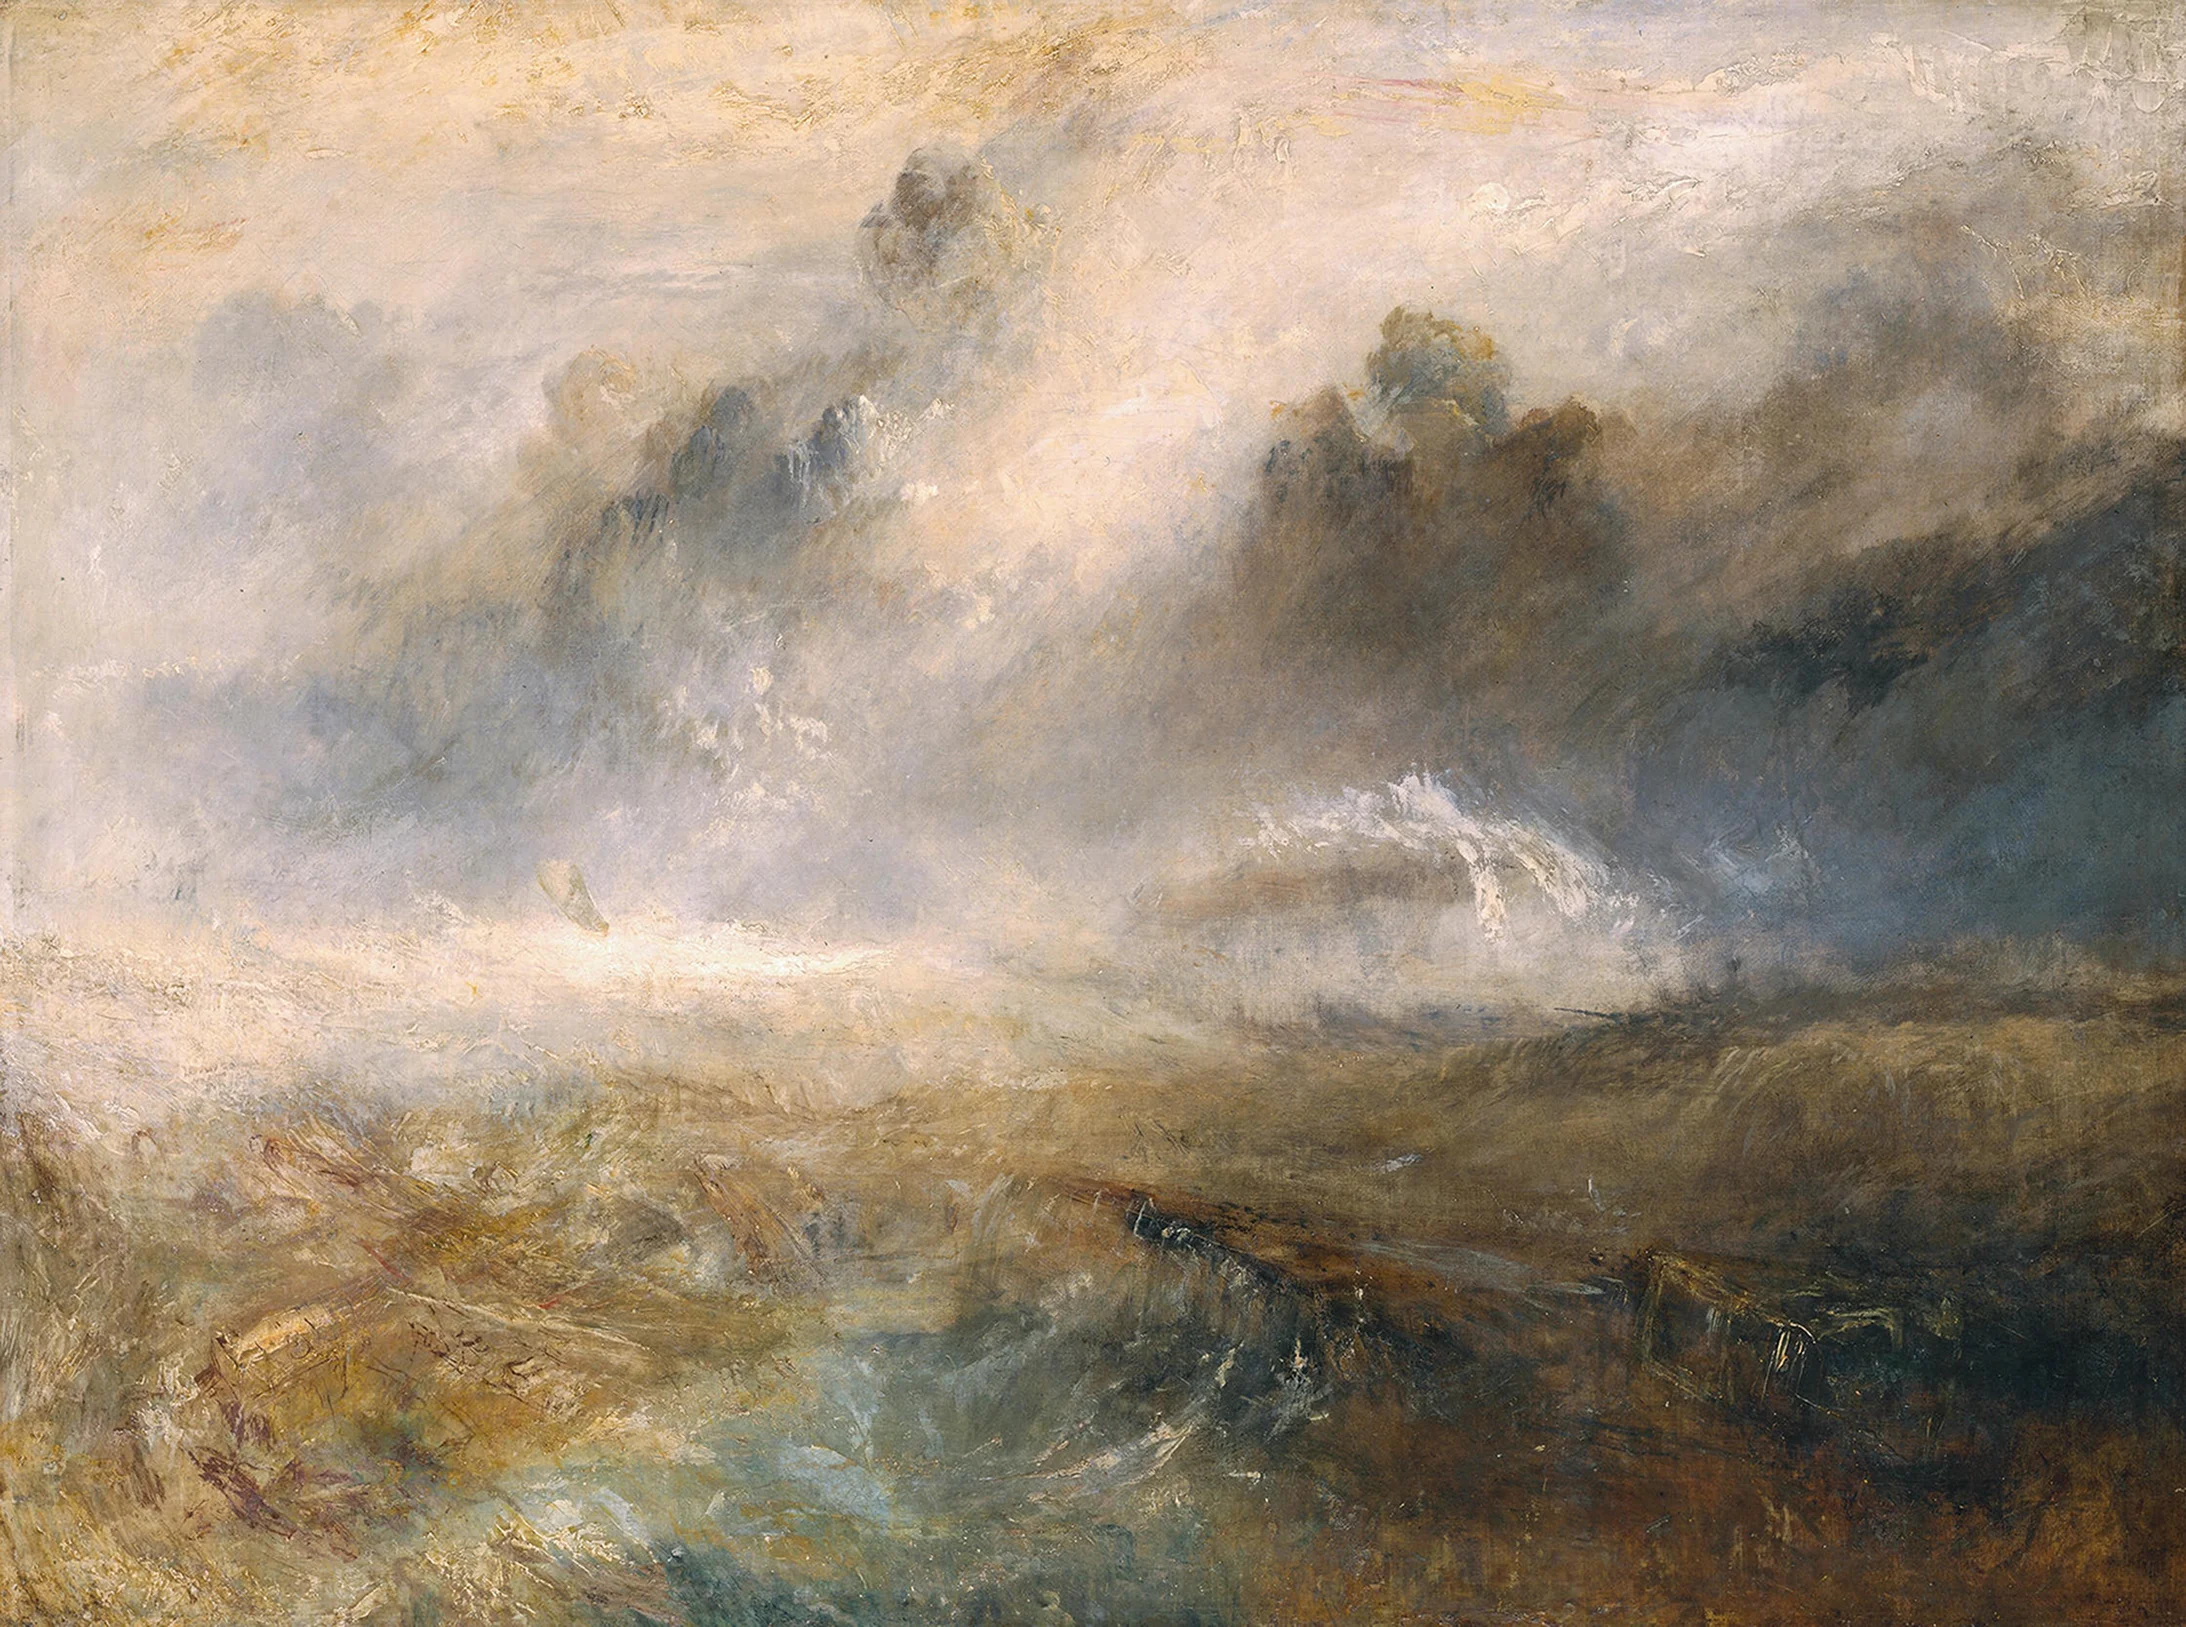 Joseph Mallord William Turner: Rough Sea with Wreckage, ca. 1840/45, Öl auf Leinwand, 191.1 x 122.6 cm, © Tate, London, 2019